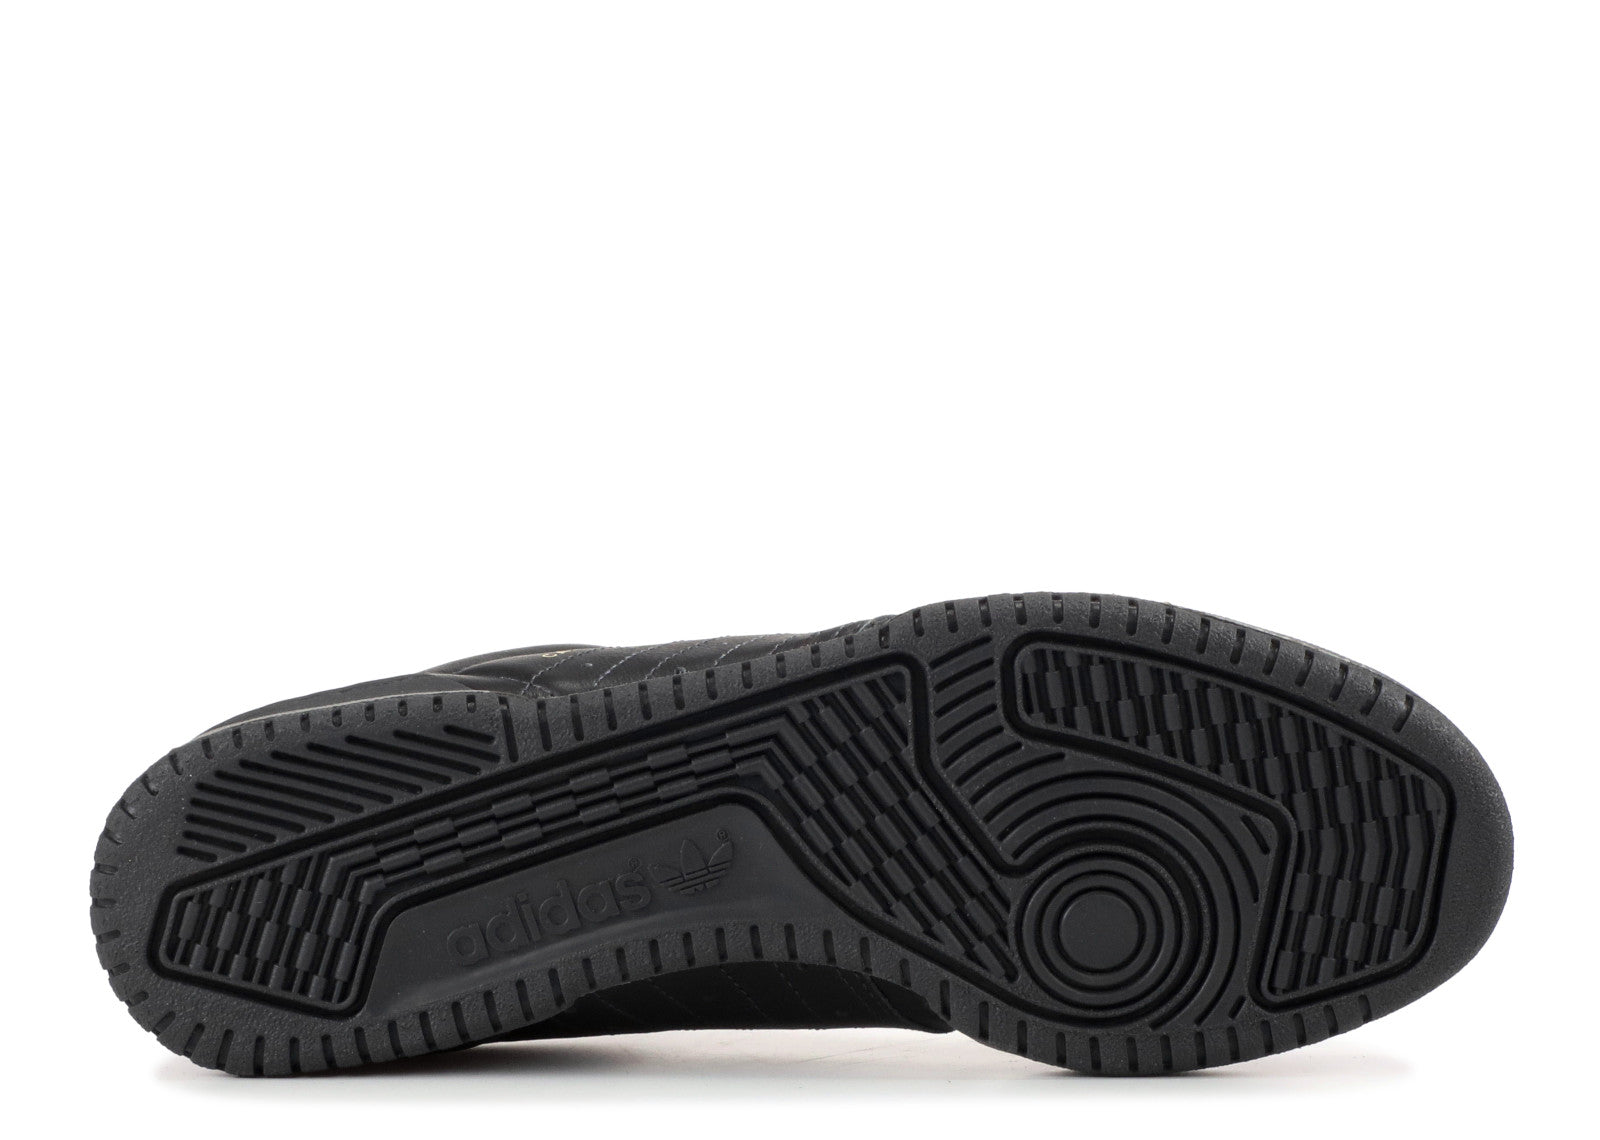 Adidas Yeezy Powerphase Calabasas 'Core Black'